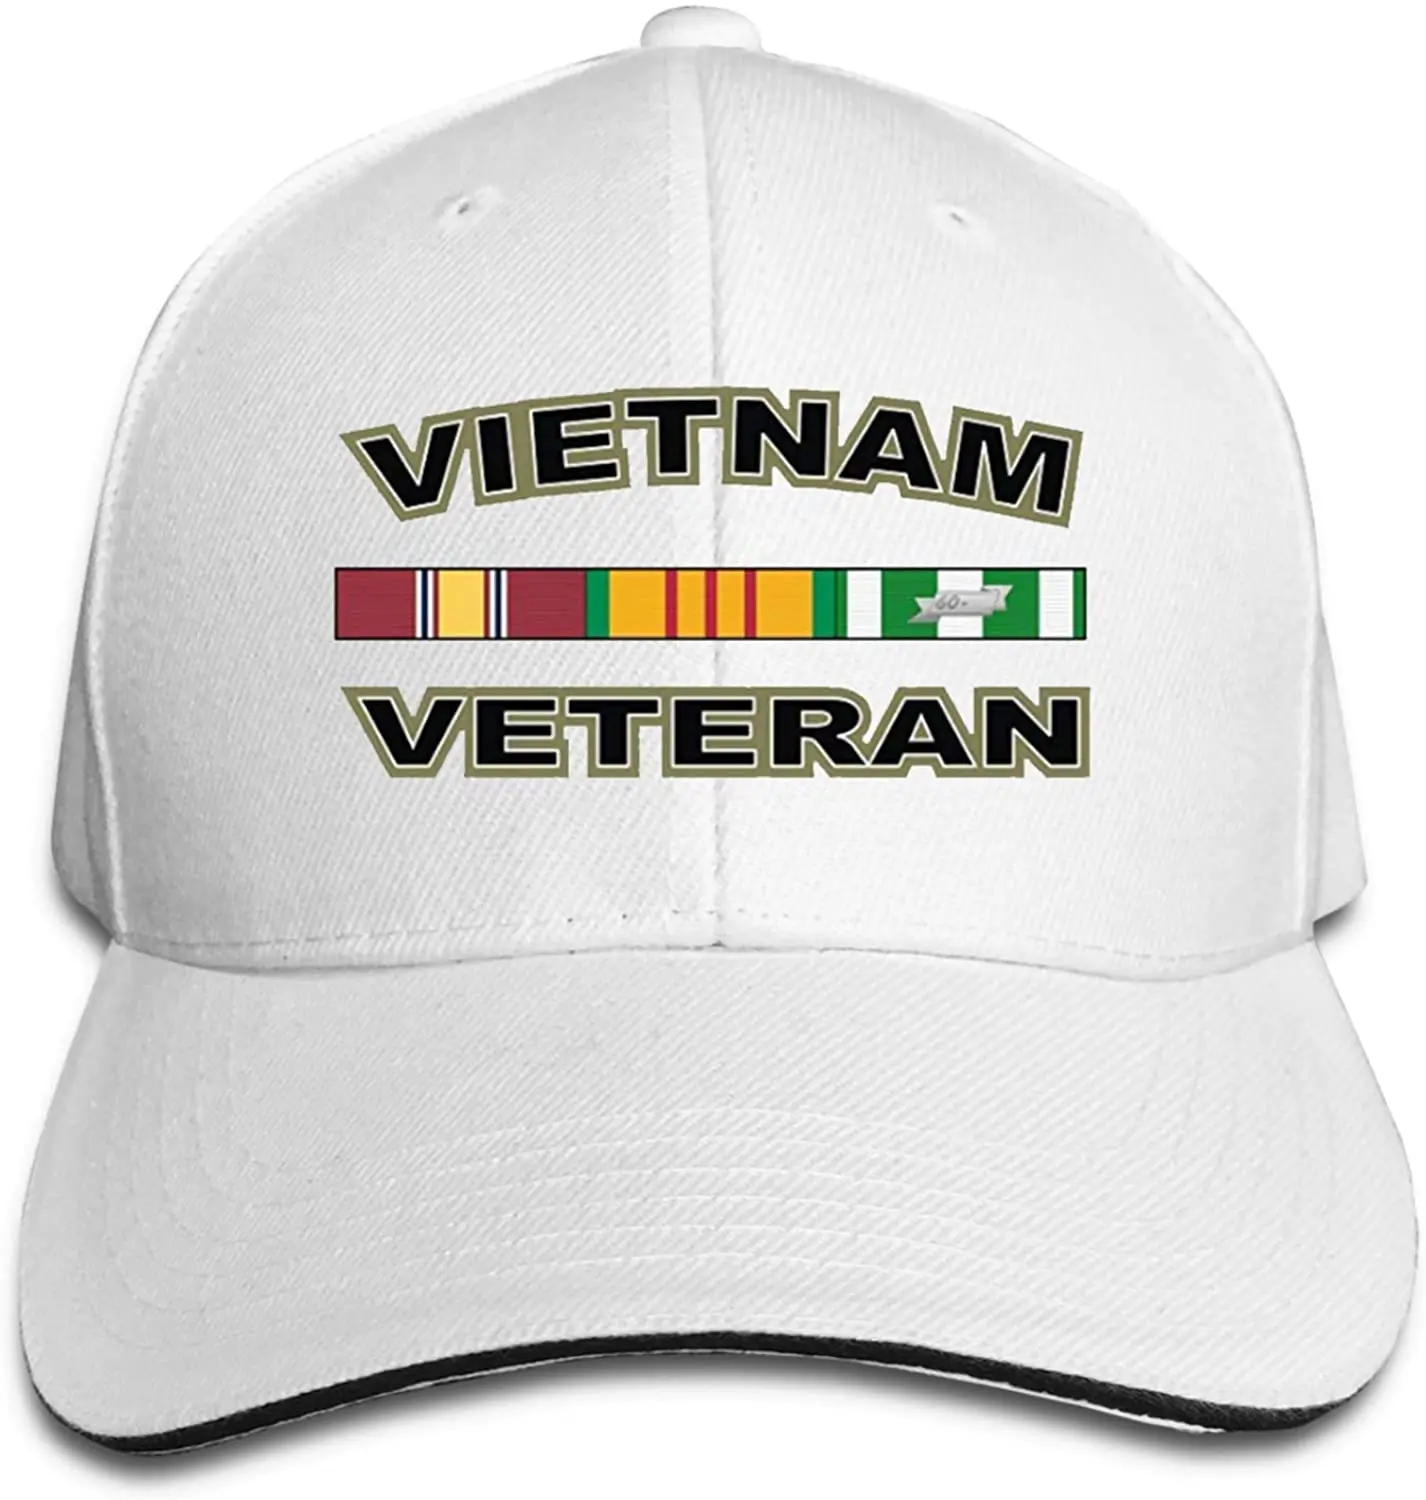 

Us Army Vietnam Veteran Baseball Caps Sandwich Caps